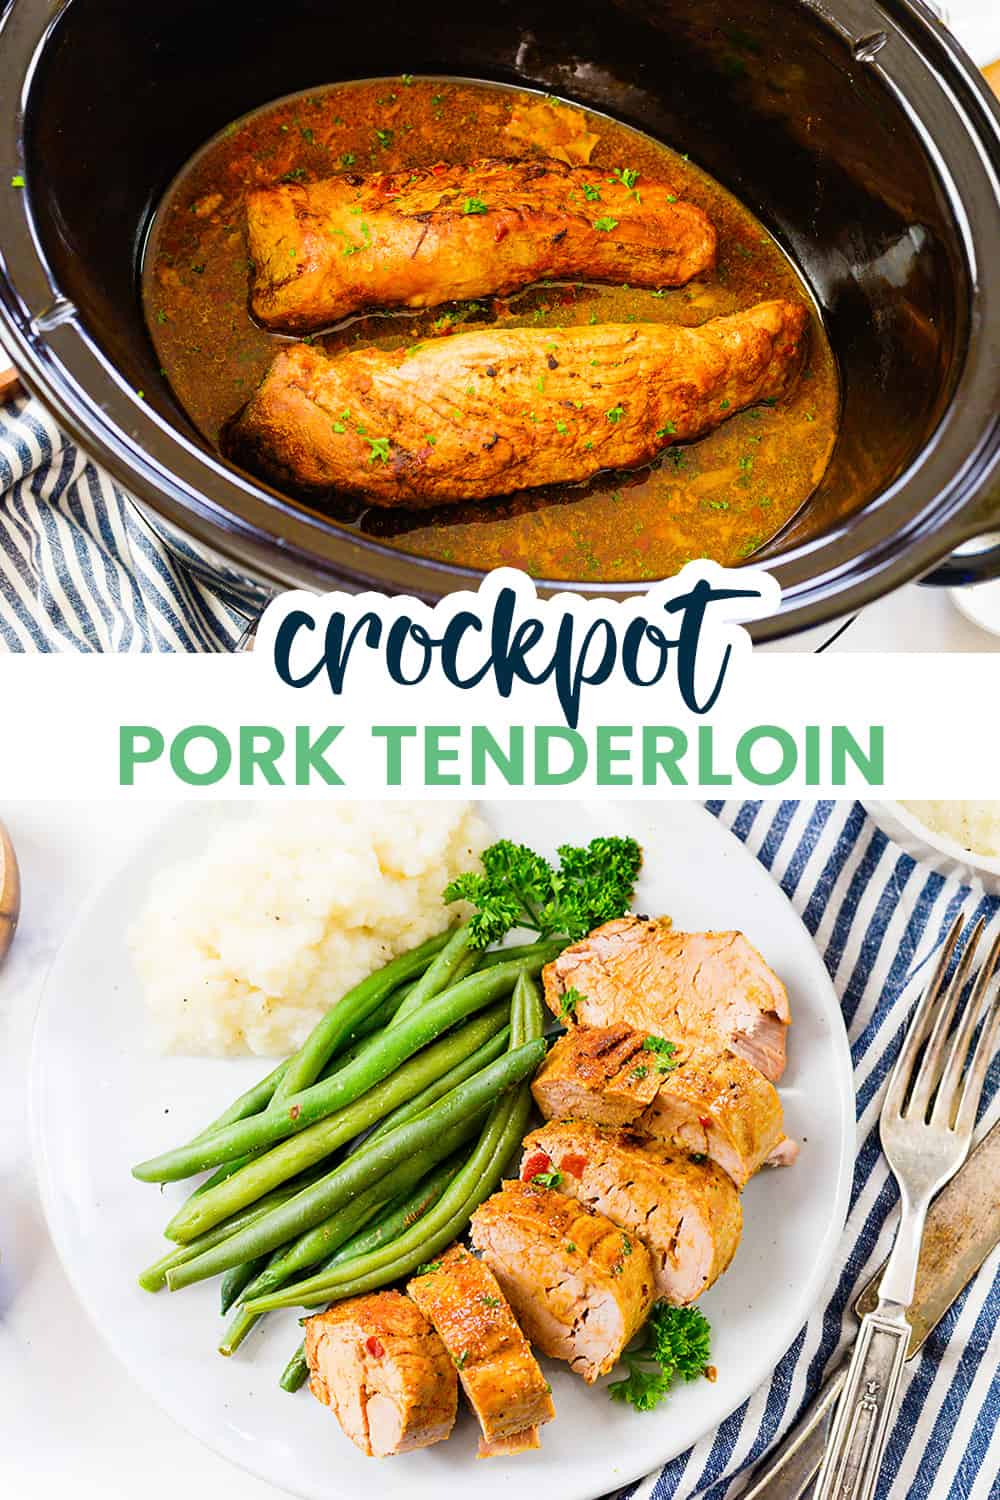 Collage of crockpot pork tenderloin images.